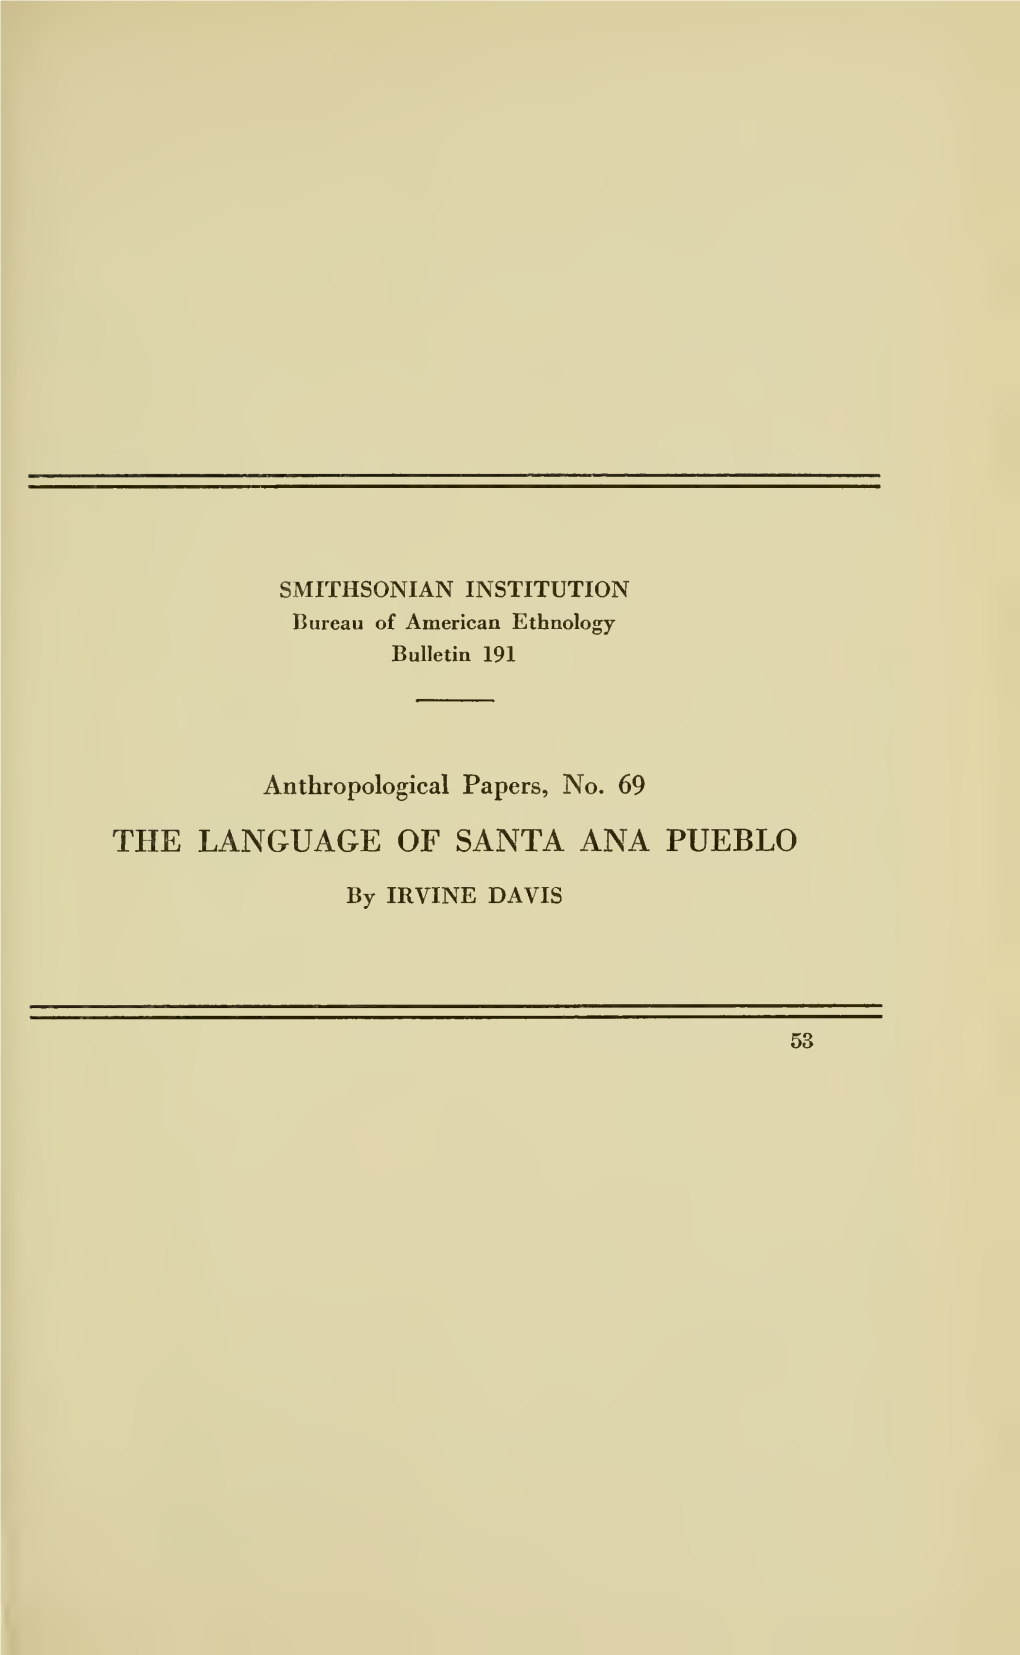 The Language of Santa Ana Pueblo